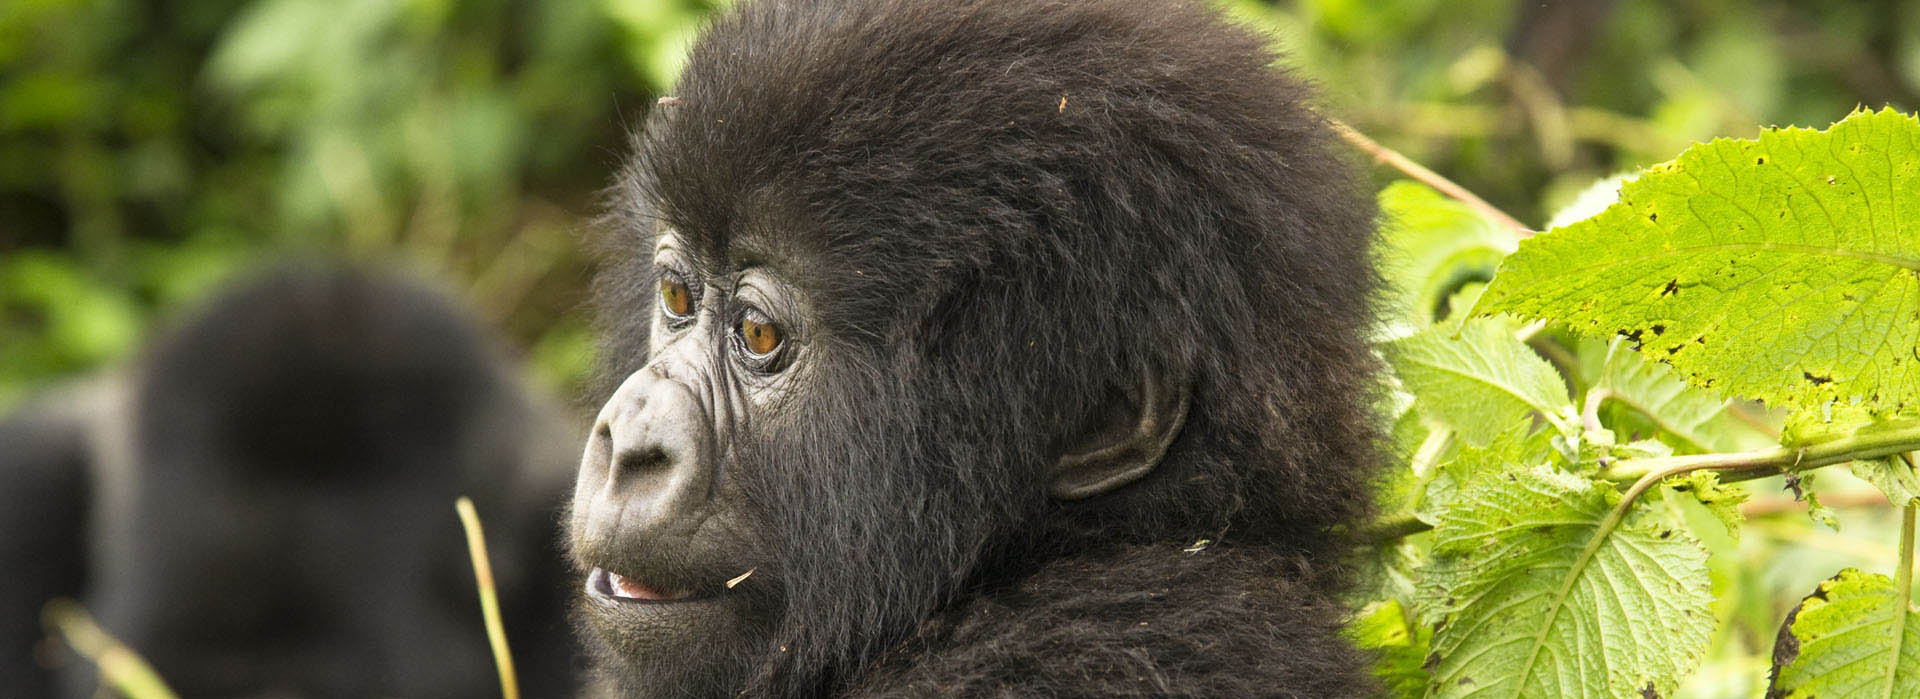 Mountain gorilla juvenille